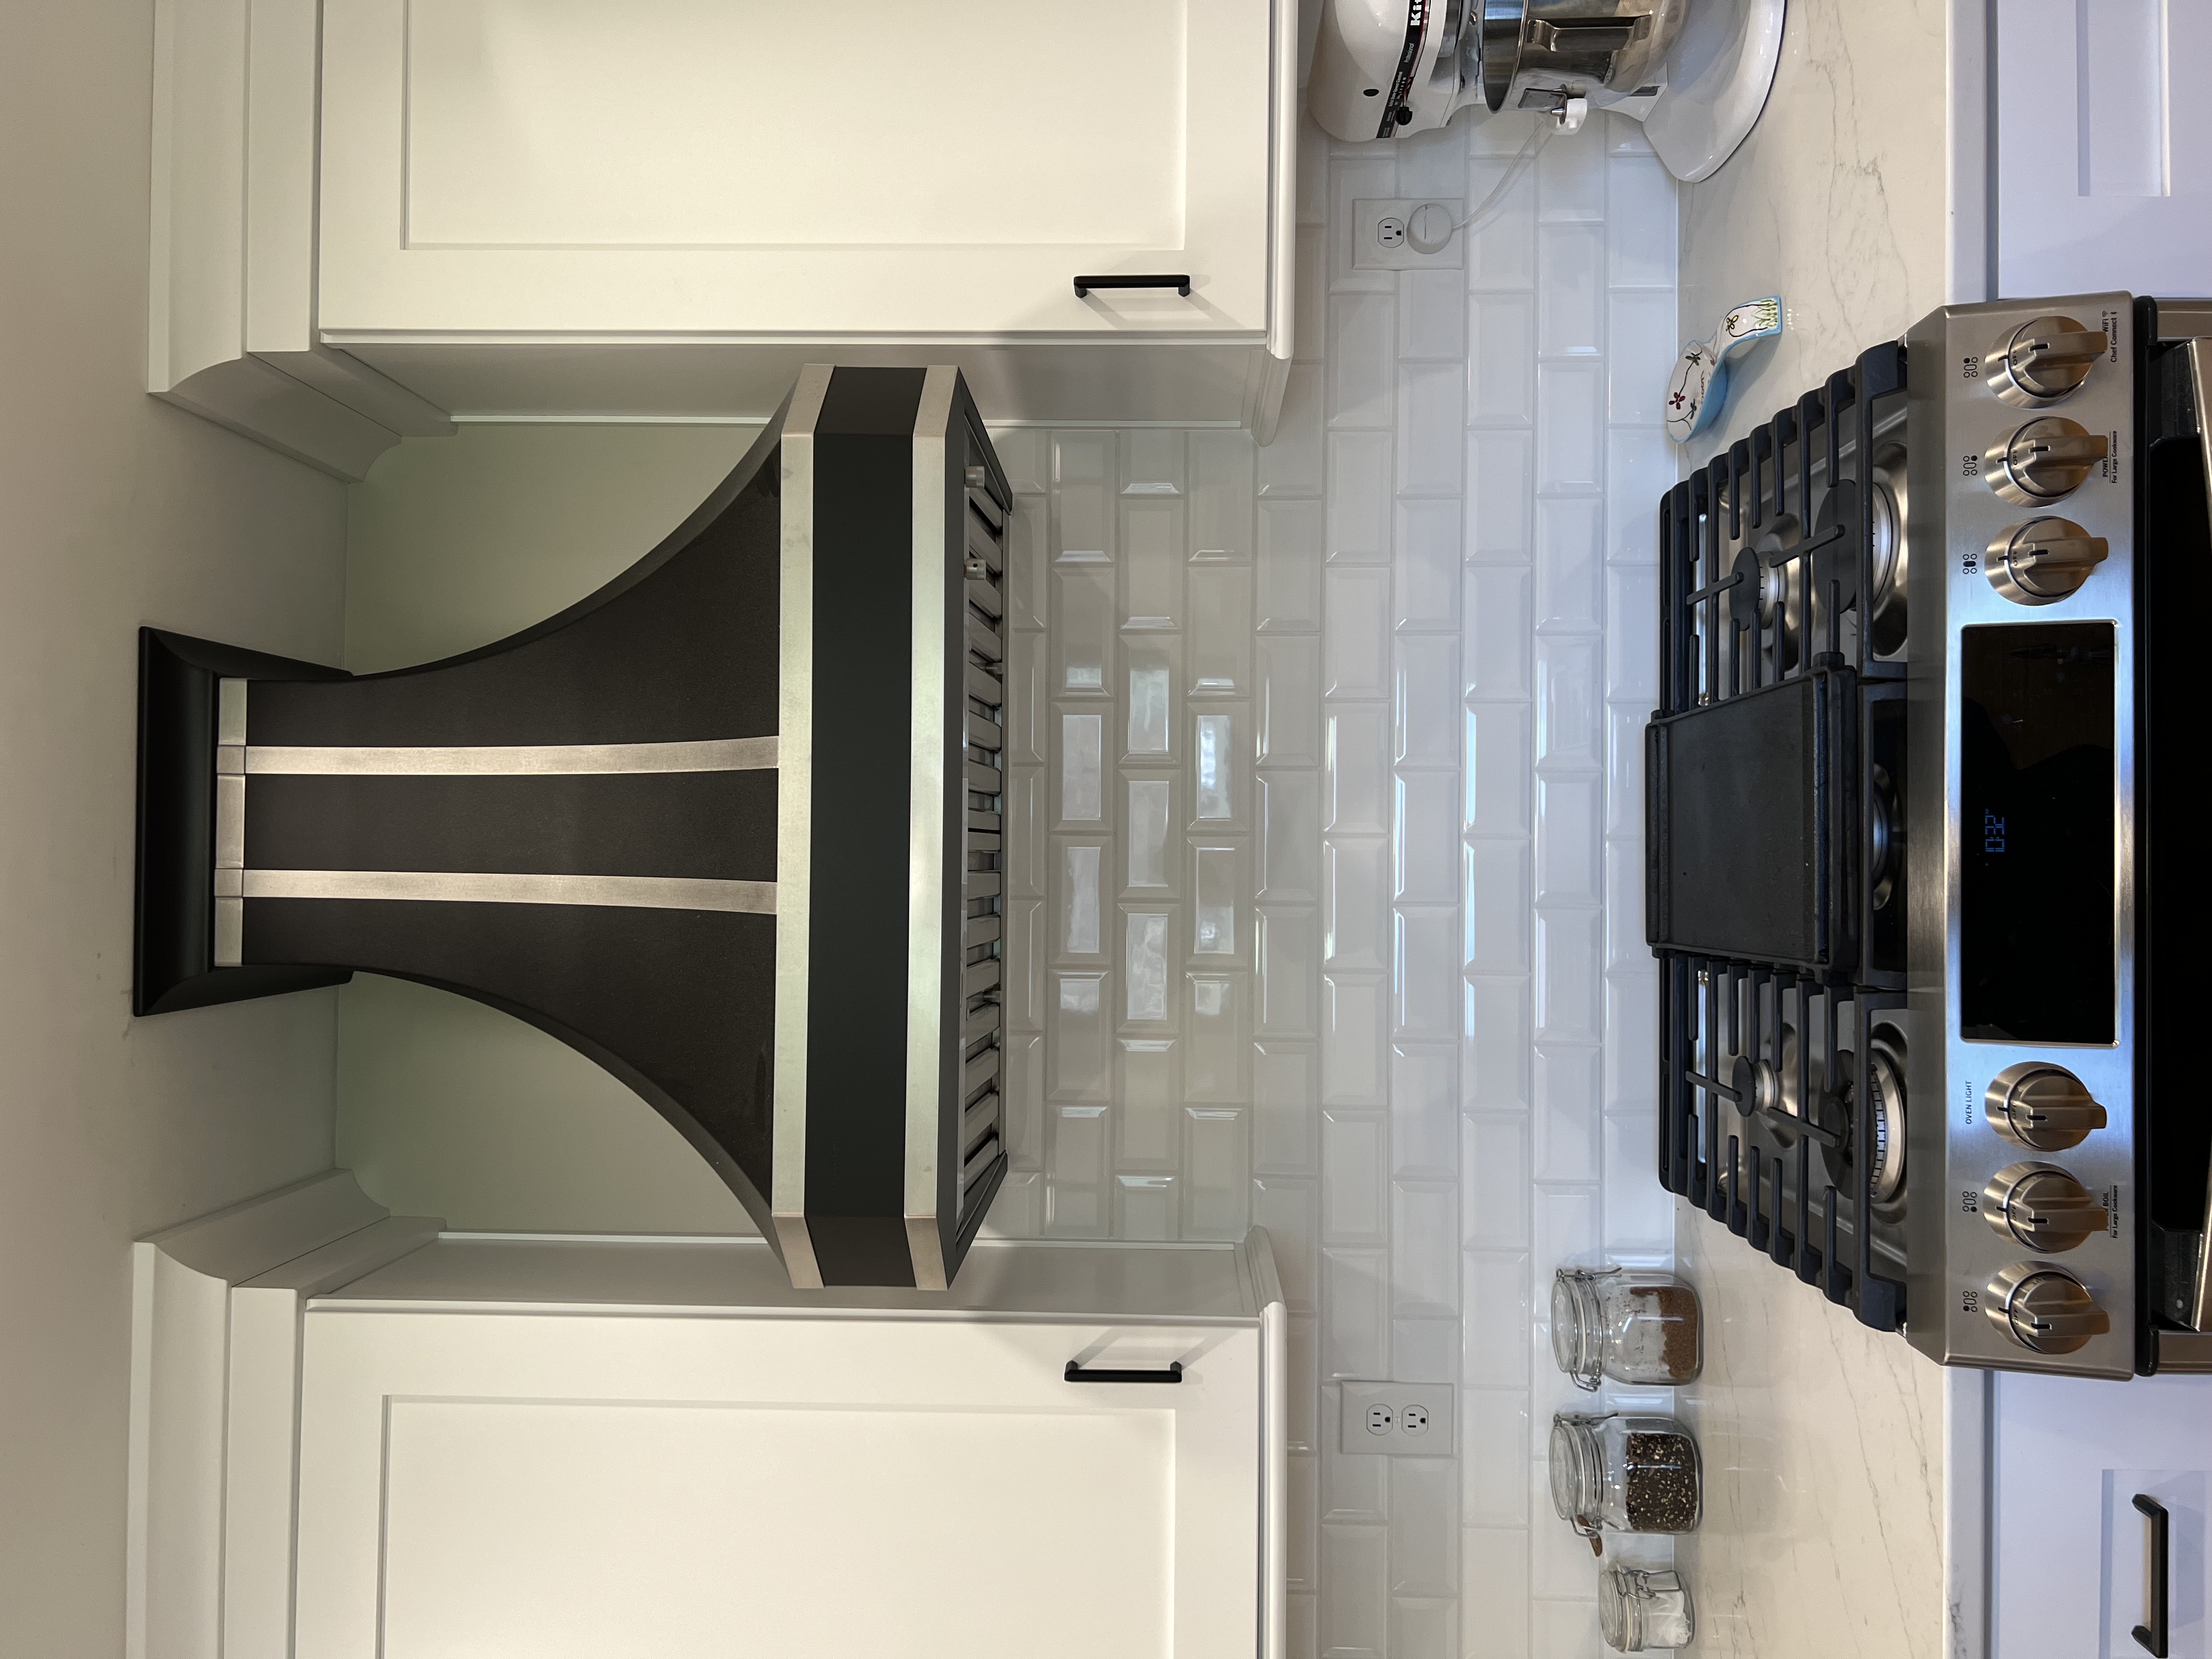 Modern kitchen design idea with unique range hood, sleek white kitchen cabinets, black kitchen countertops, white tile backsplash and with french-inspired elements